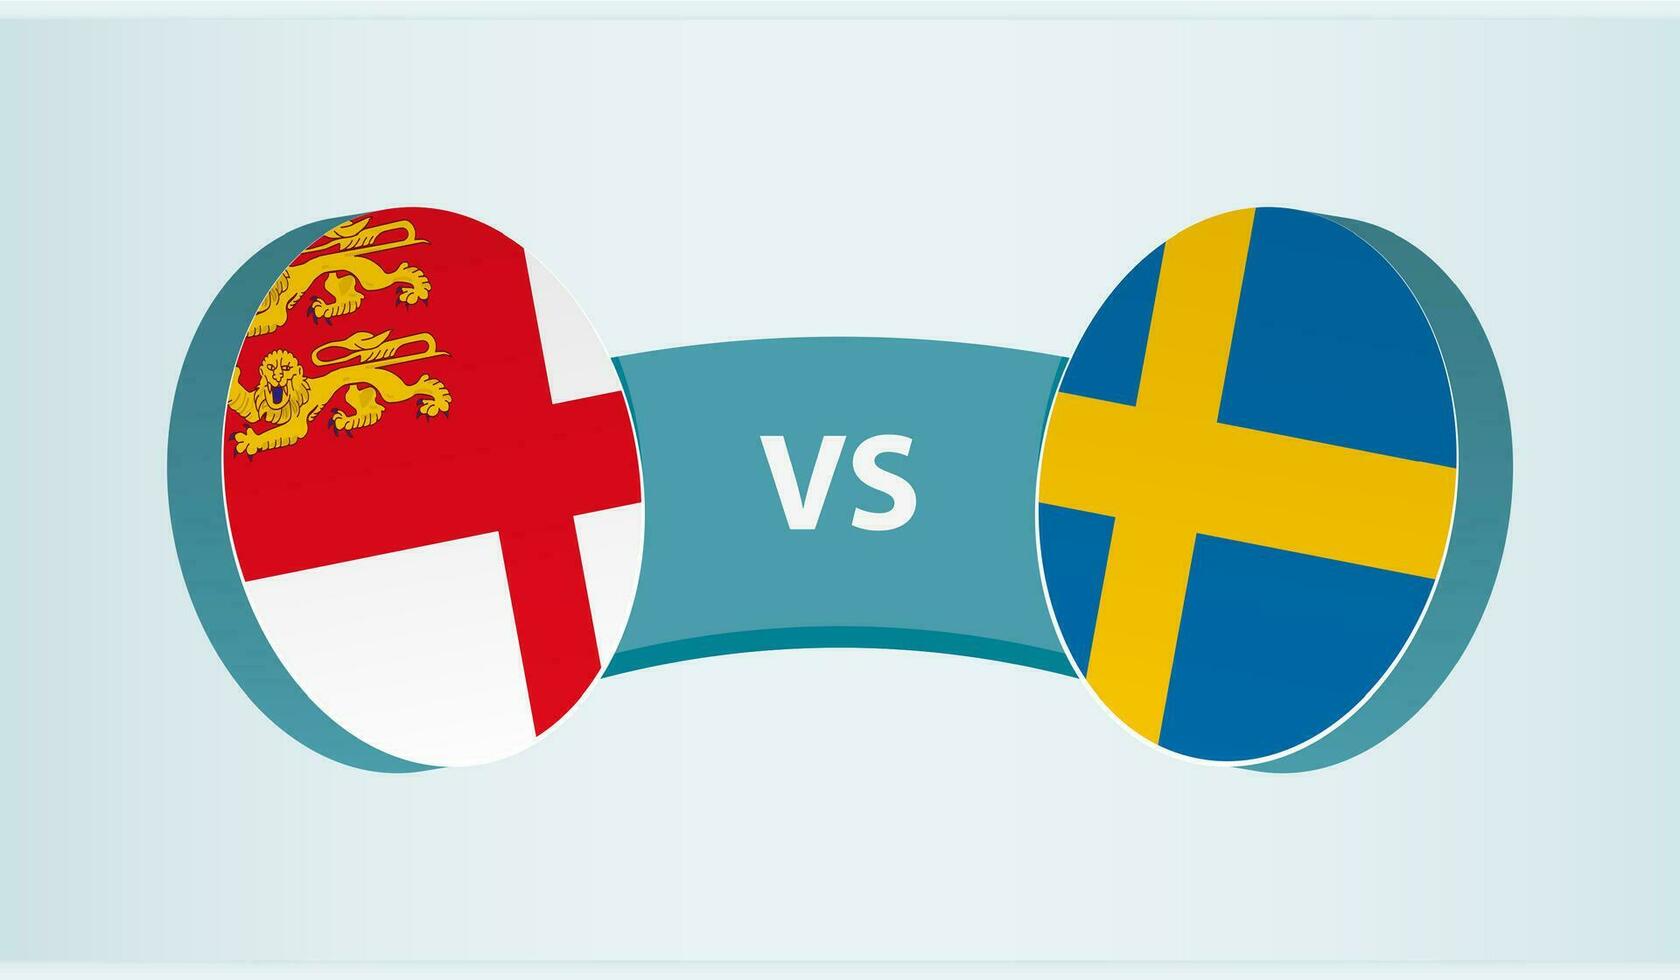 Sark versus Sweden, team sports competition concept. vector